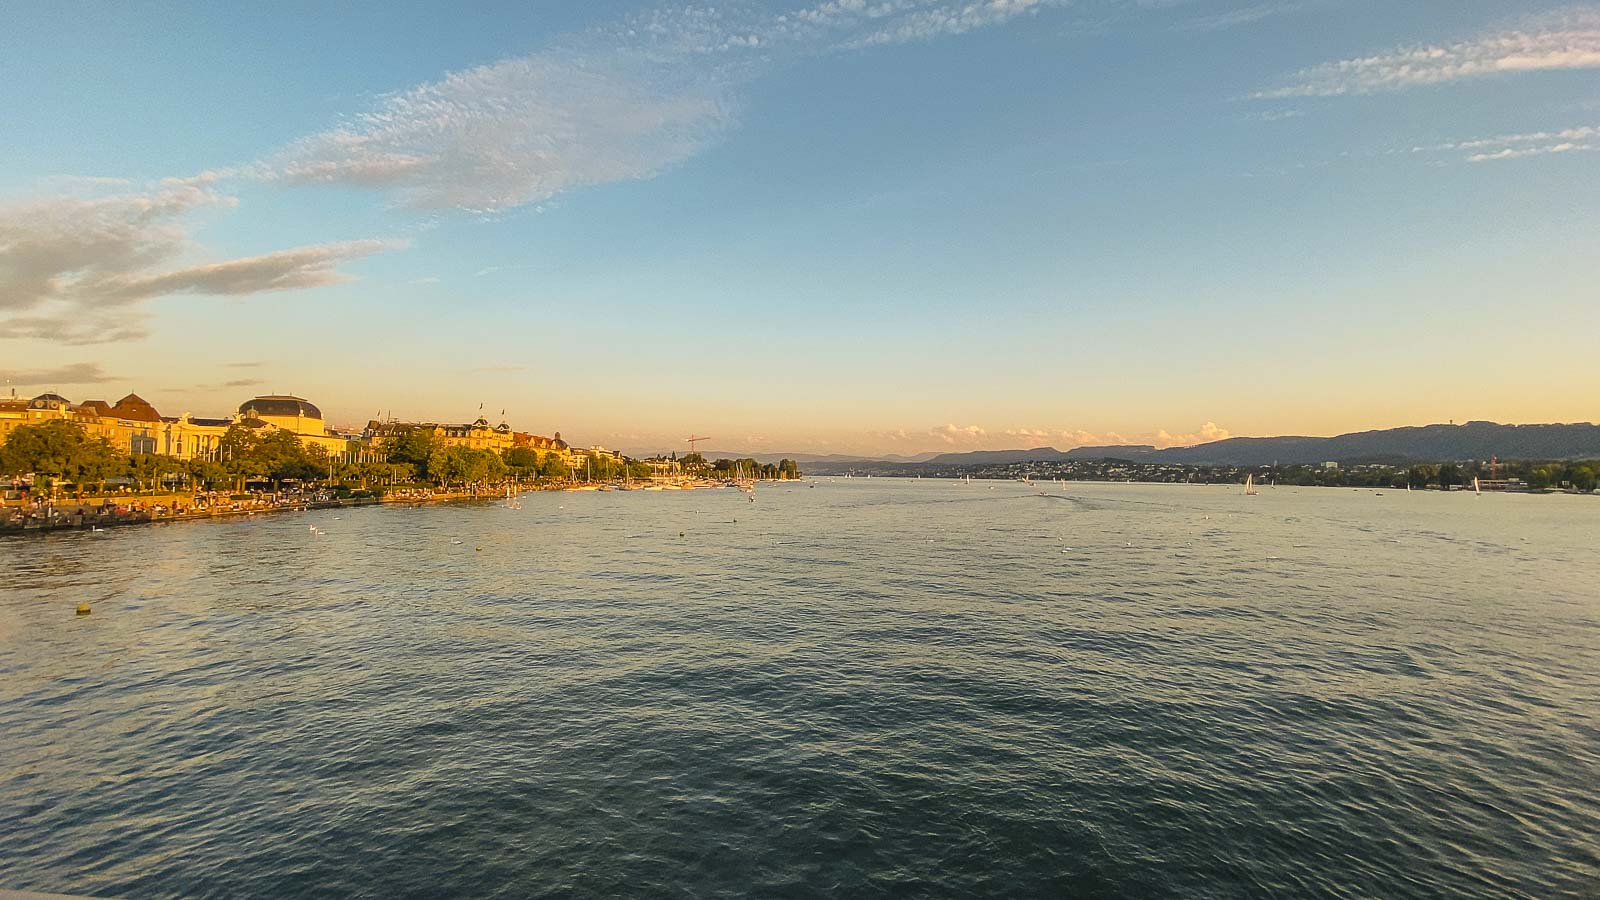 Sunset over Lake Zurich